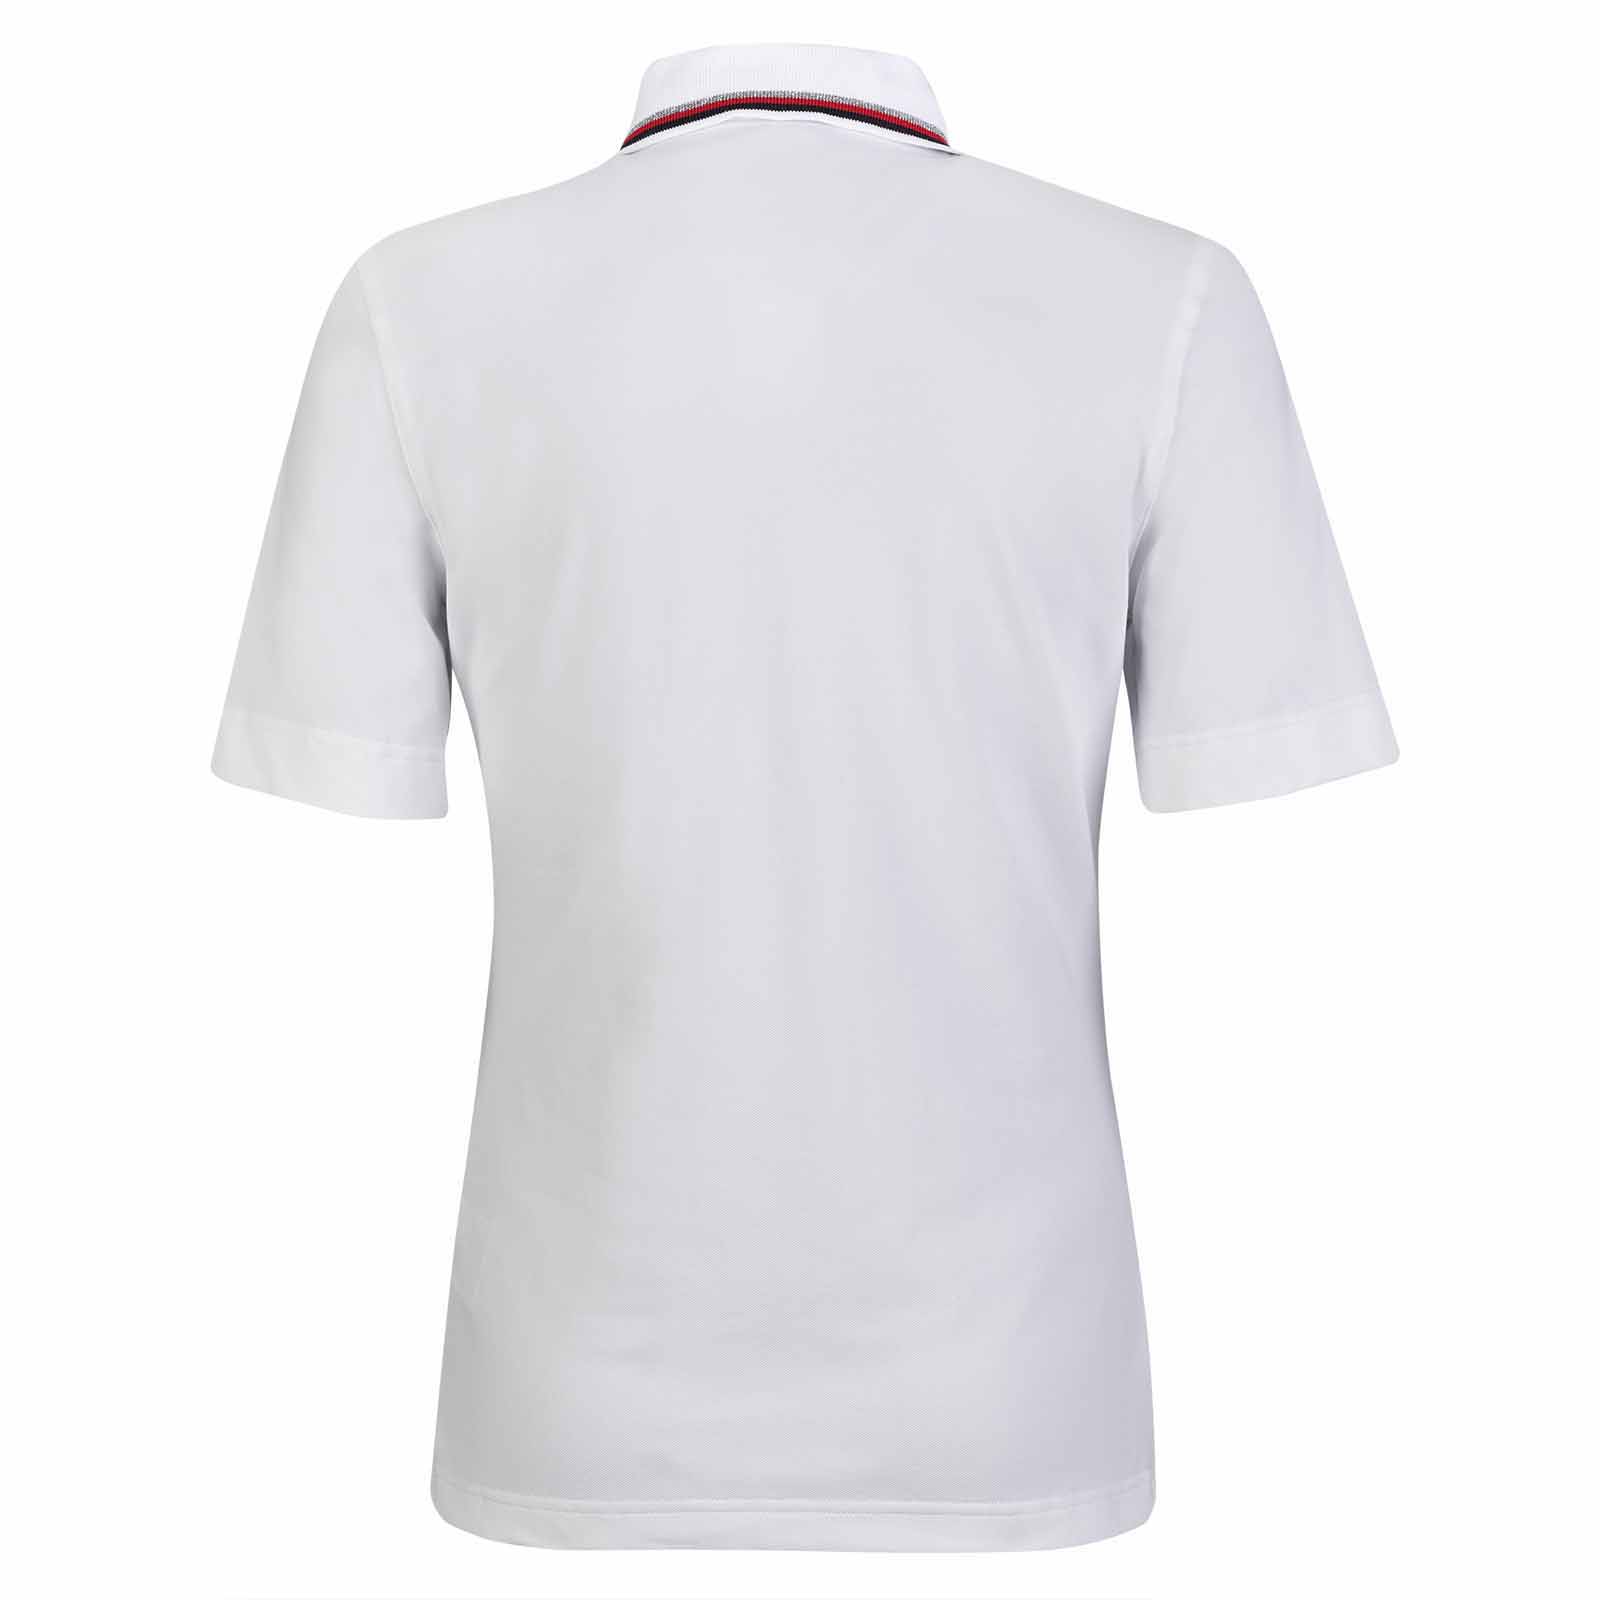 Golfino Club Short Sleeve Polo Optic White